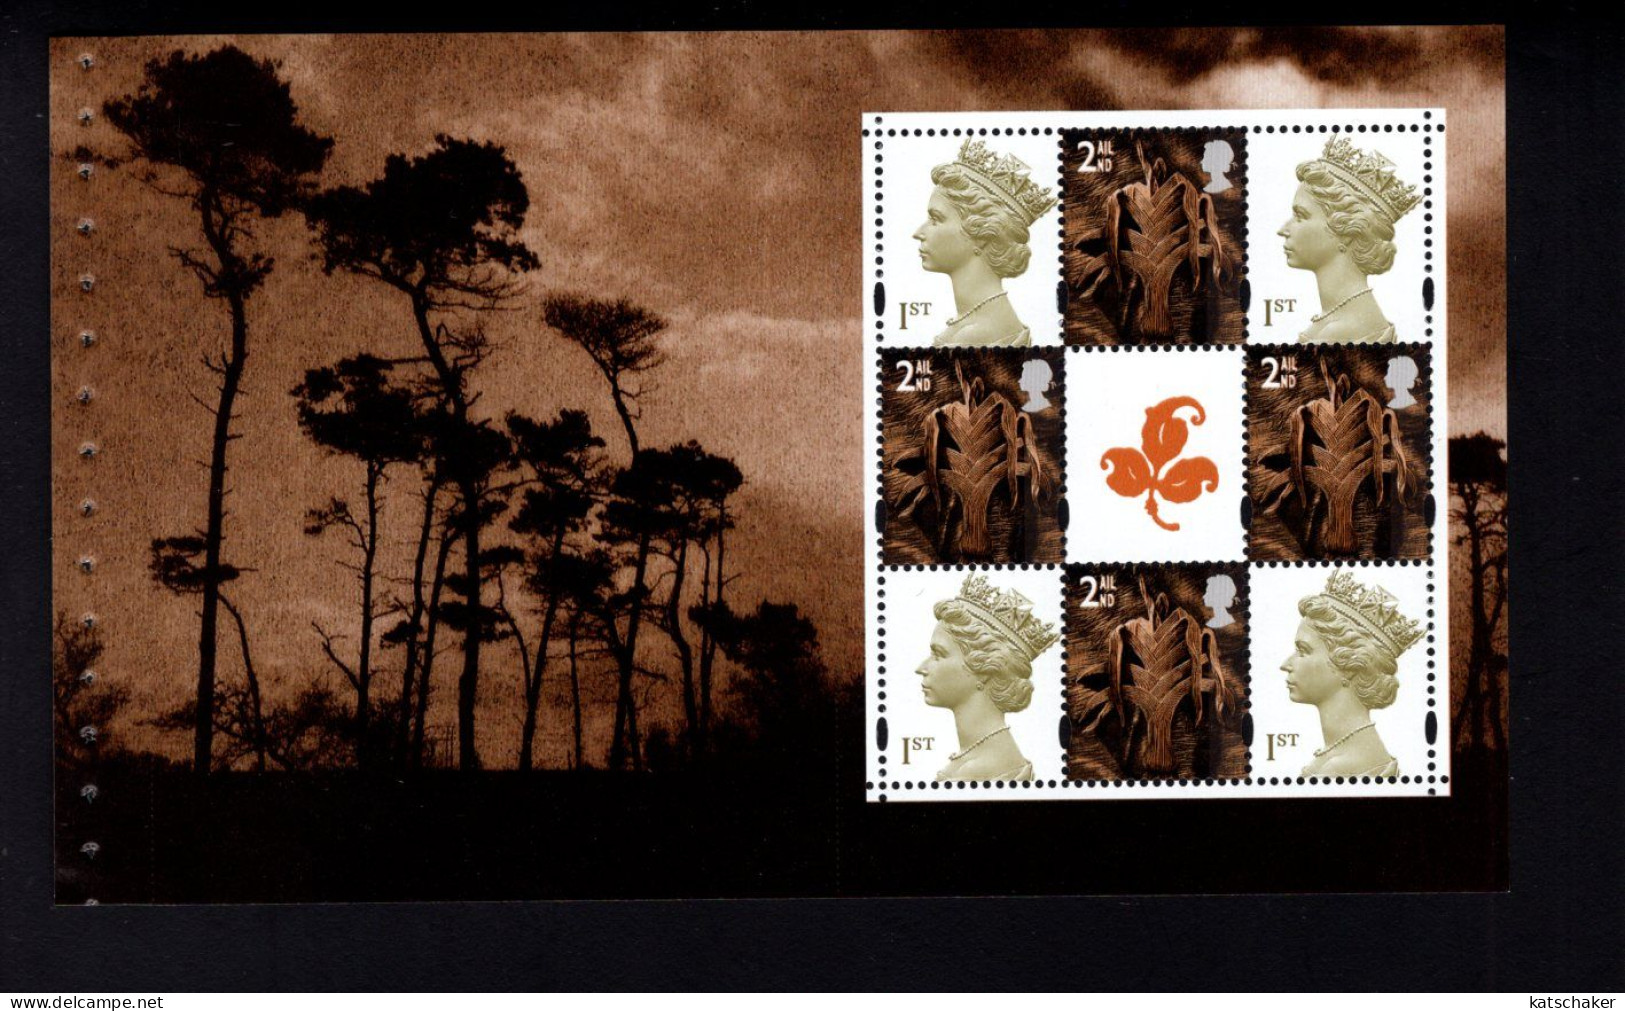 1919391885 2000 SCOTT 18A  (XX) POSTFRIS MINT NEVER HINGED  -   BOOKLET PANE  - TREES - Pays De Galles